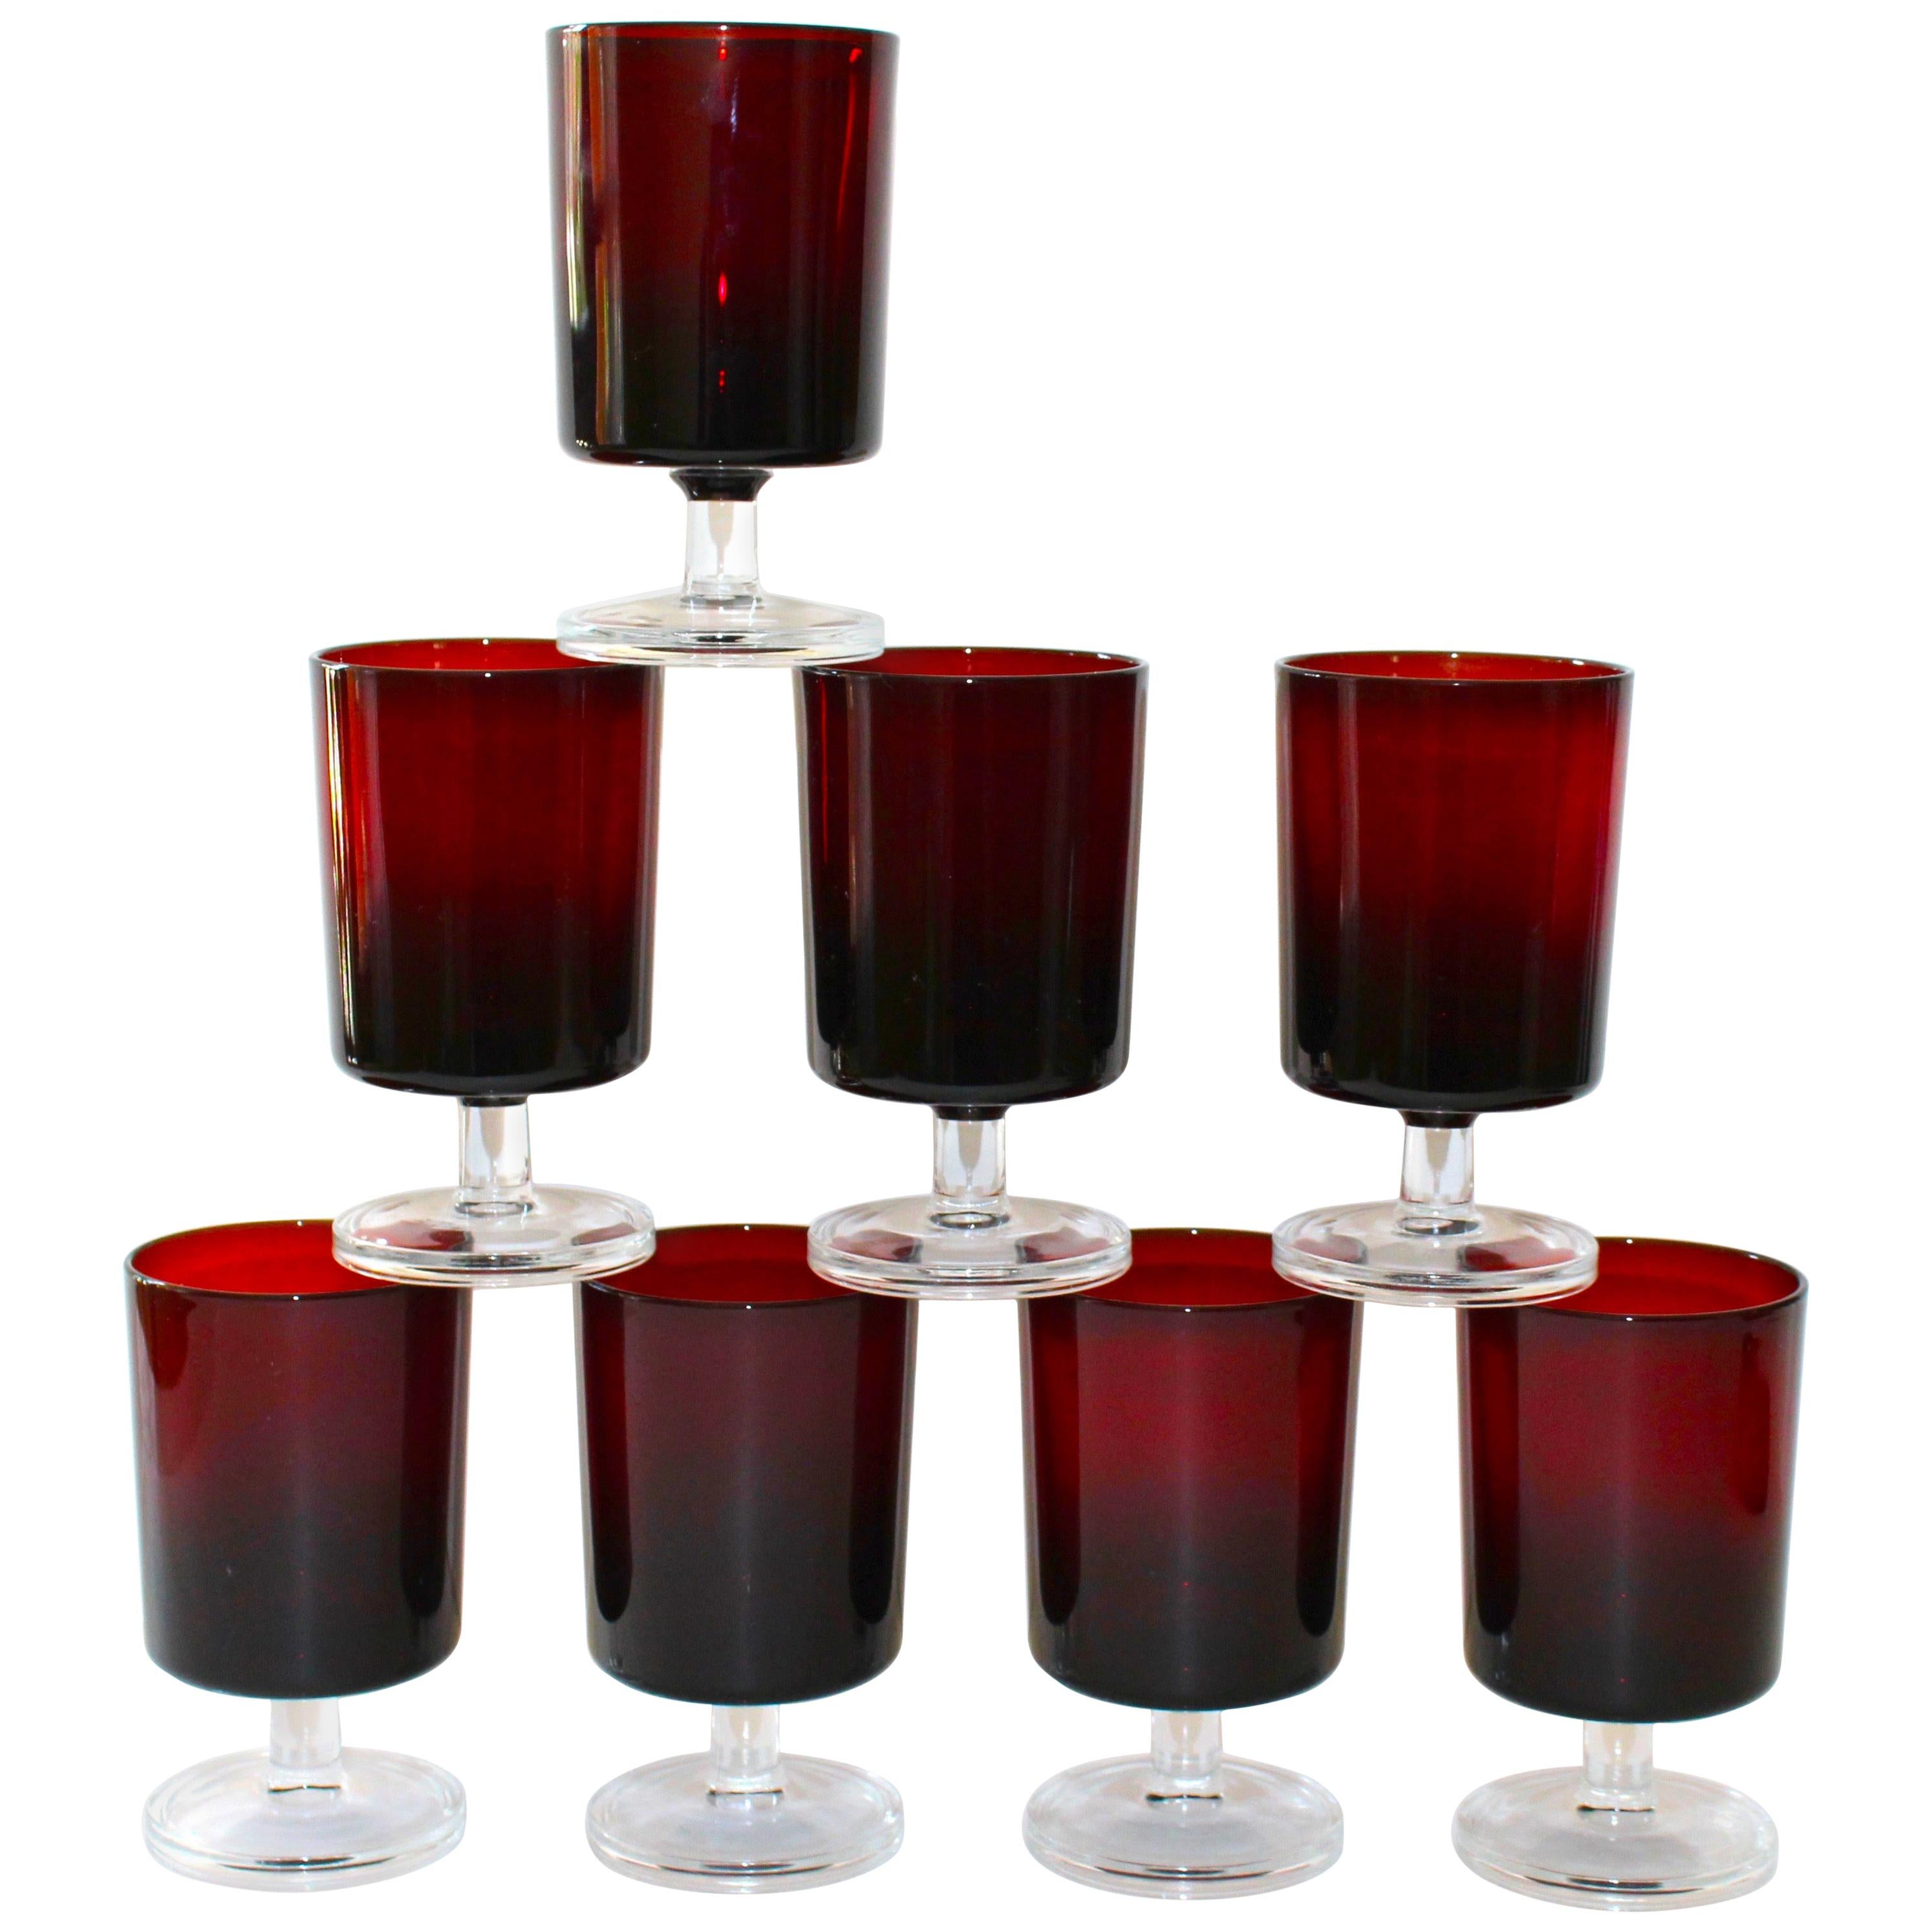 https://a.1stdibscdn.com/set-of-12-mid-century-modern-crystal-wine-glasses-in-red-1960s-for-sale/1121189/f_155619211563804673148/15561921_master.jpg